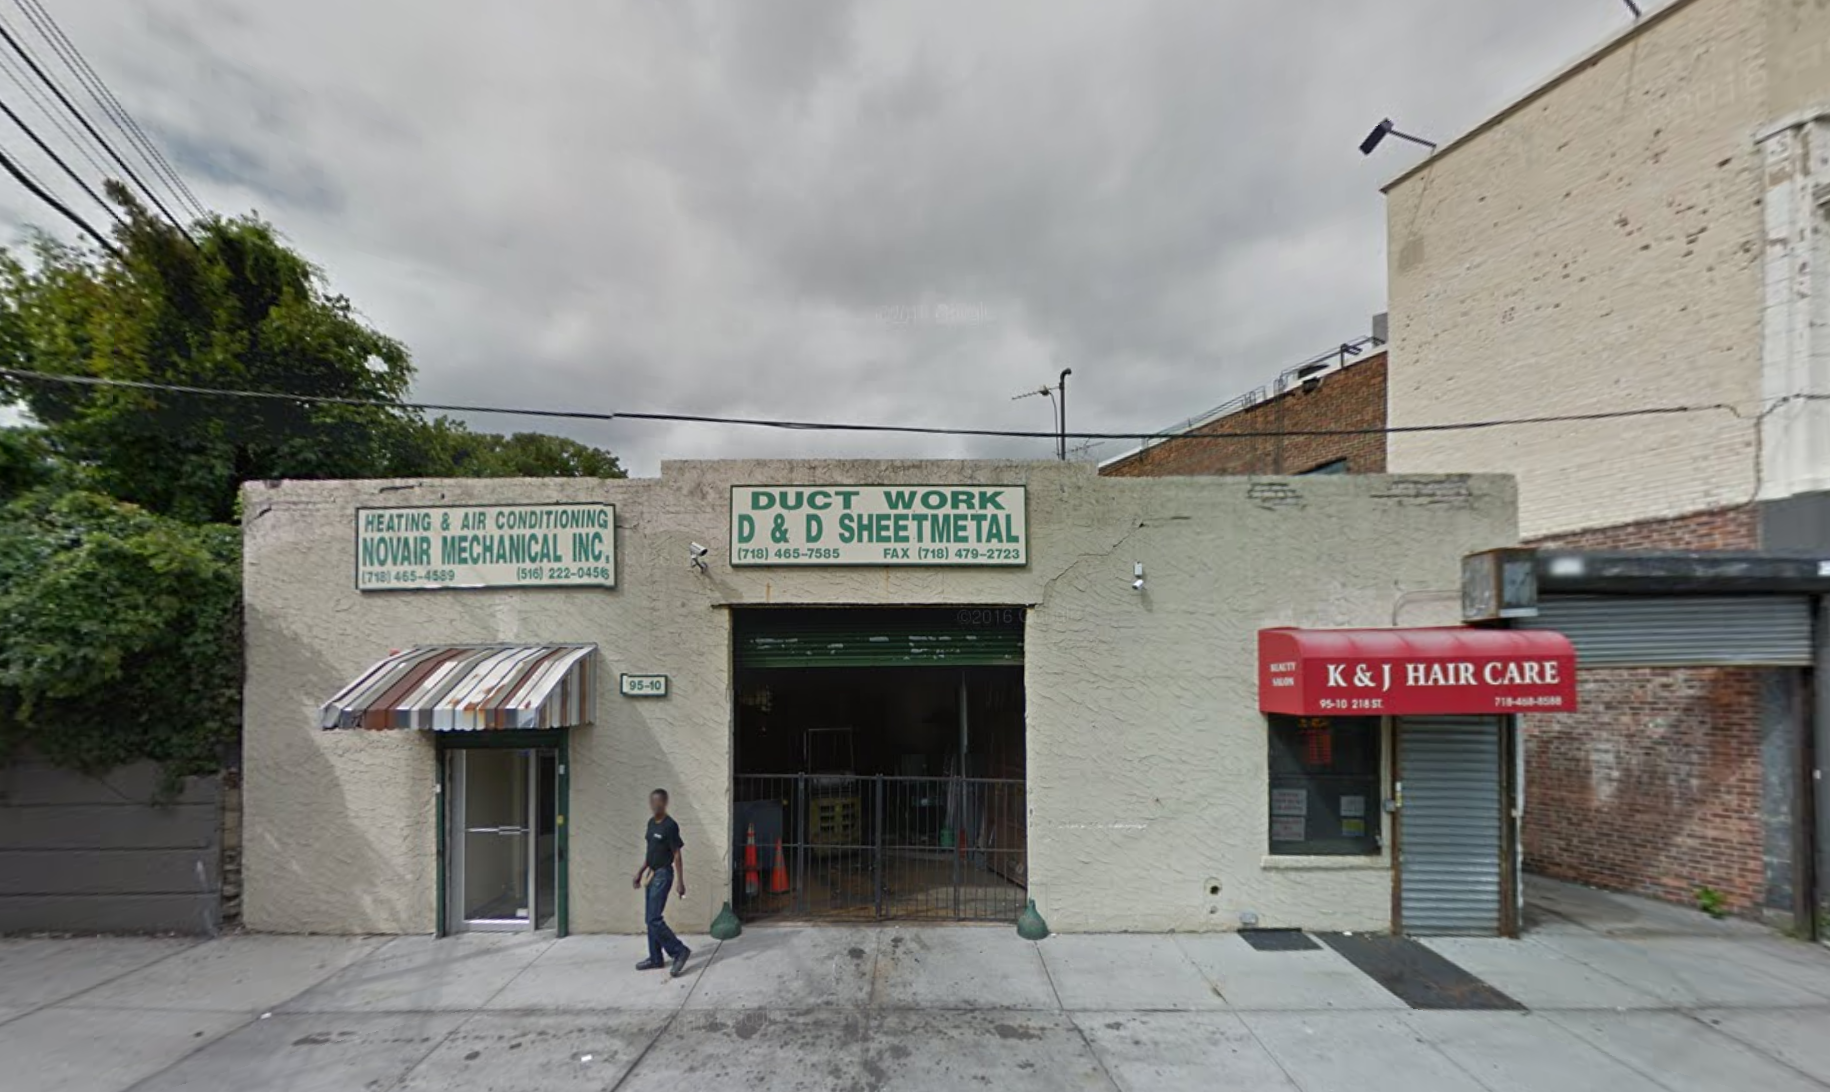 95-10 218th Street, image via Google Maps